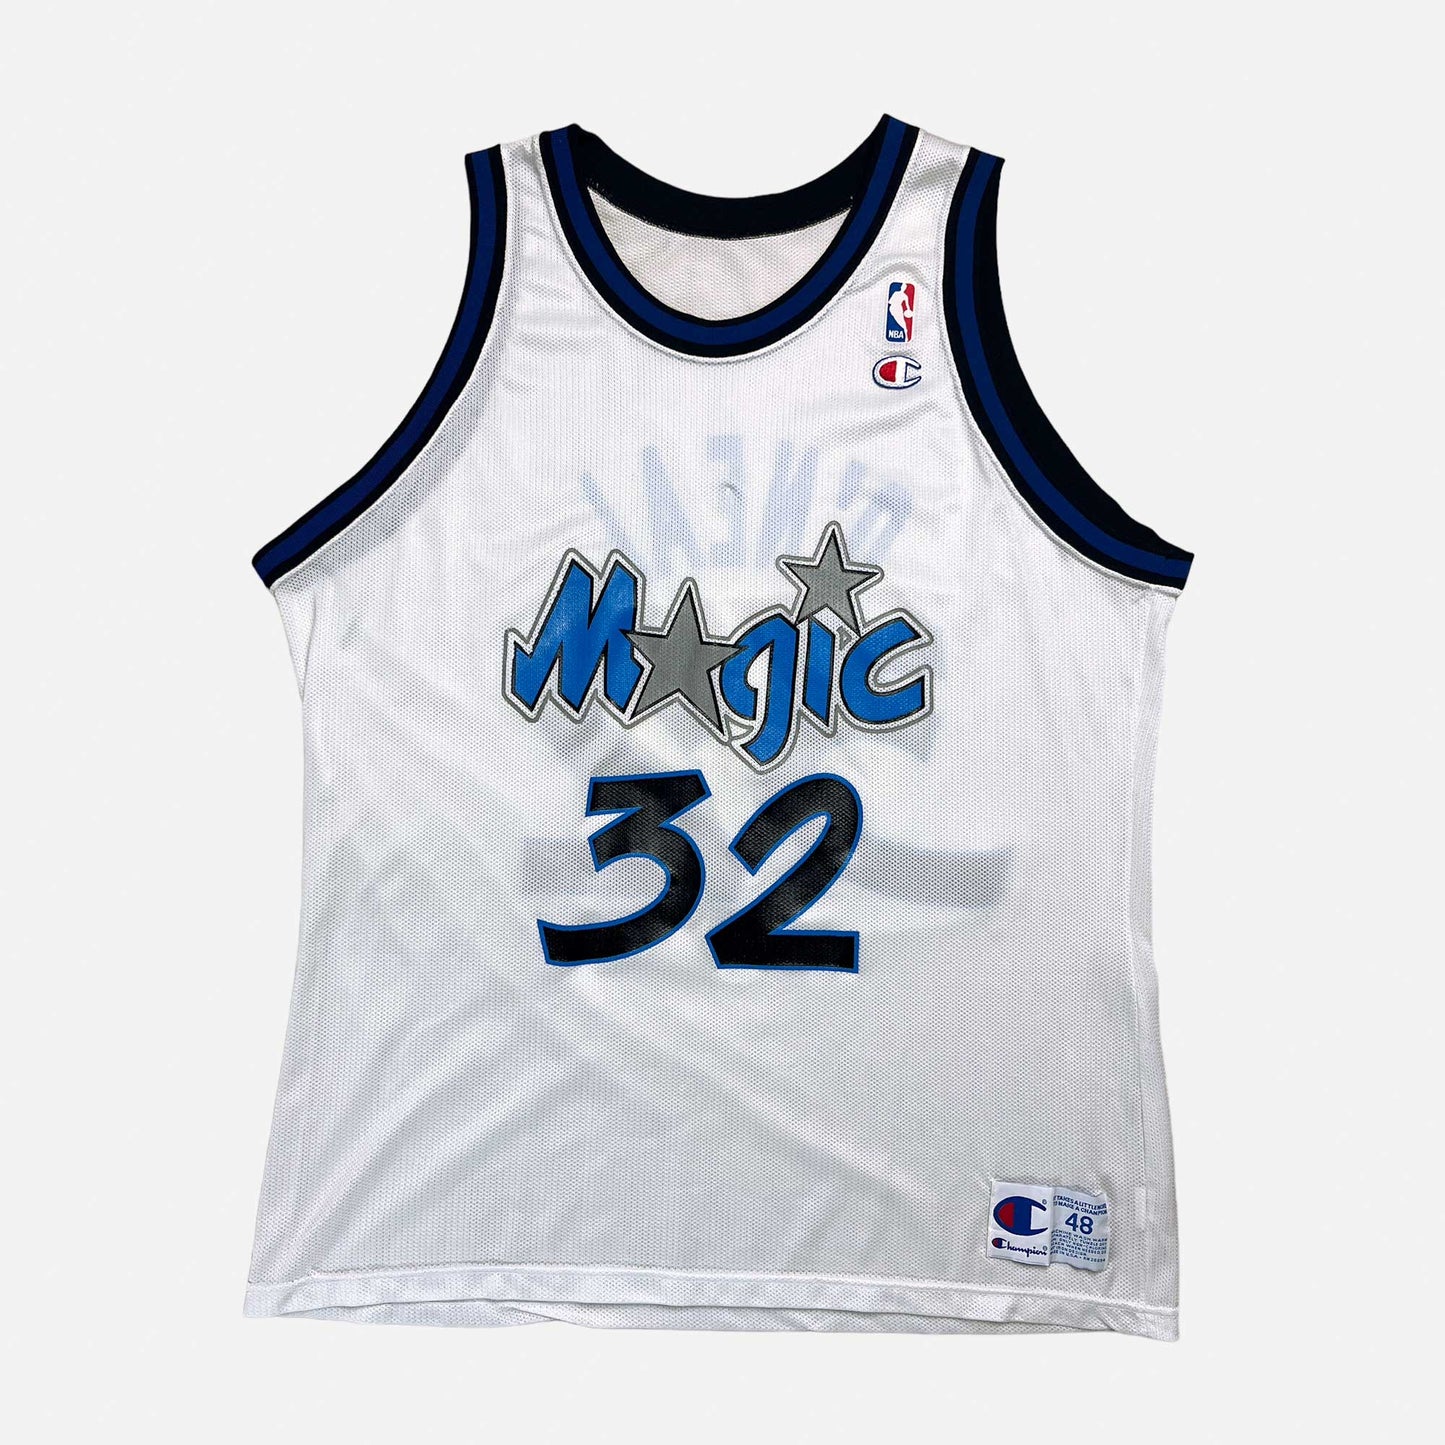 Orlando Magic - Shaquille O’Neal - Größe XL / US48 - Champion - NBA Trikot